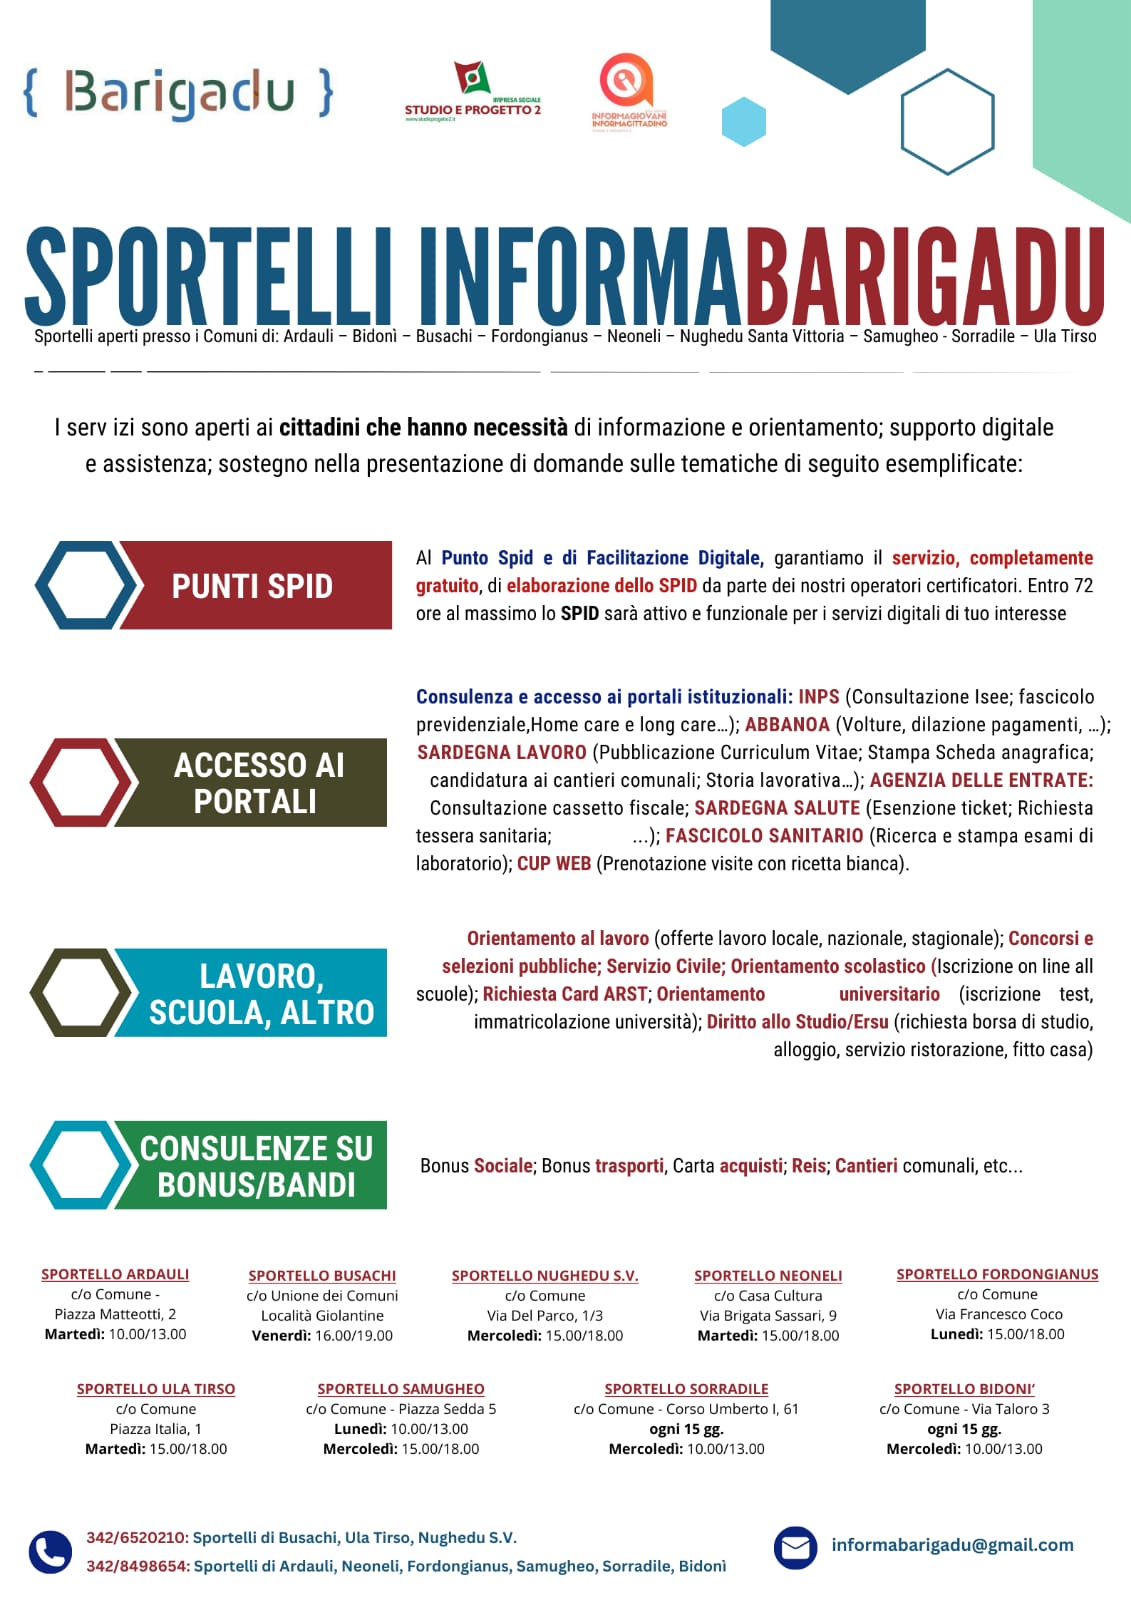 Sportello Informa Barigadu